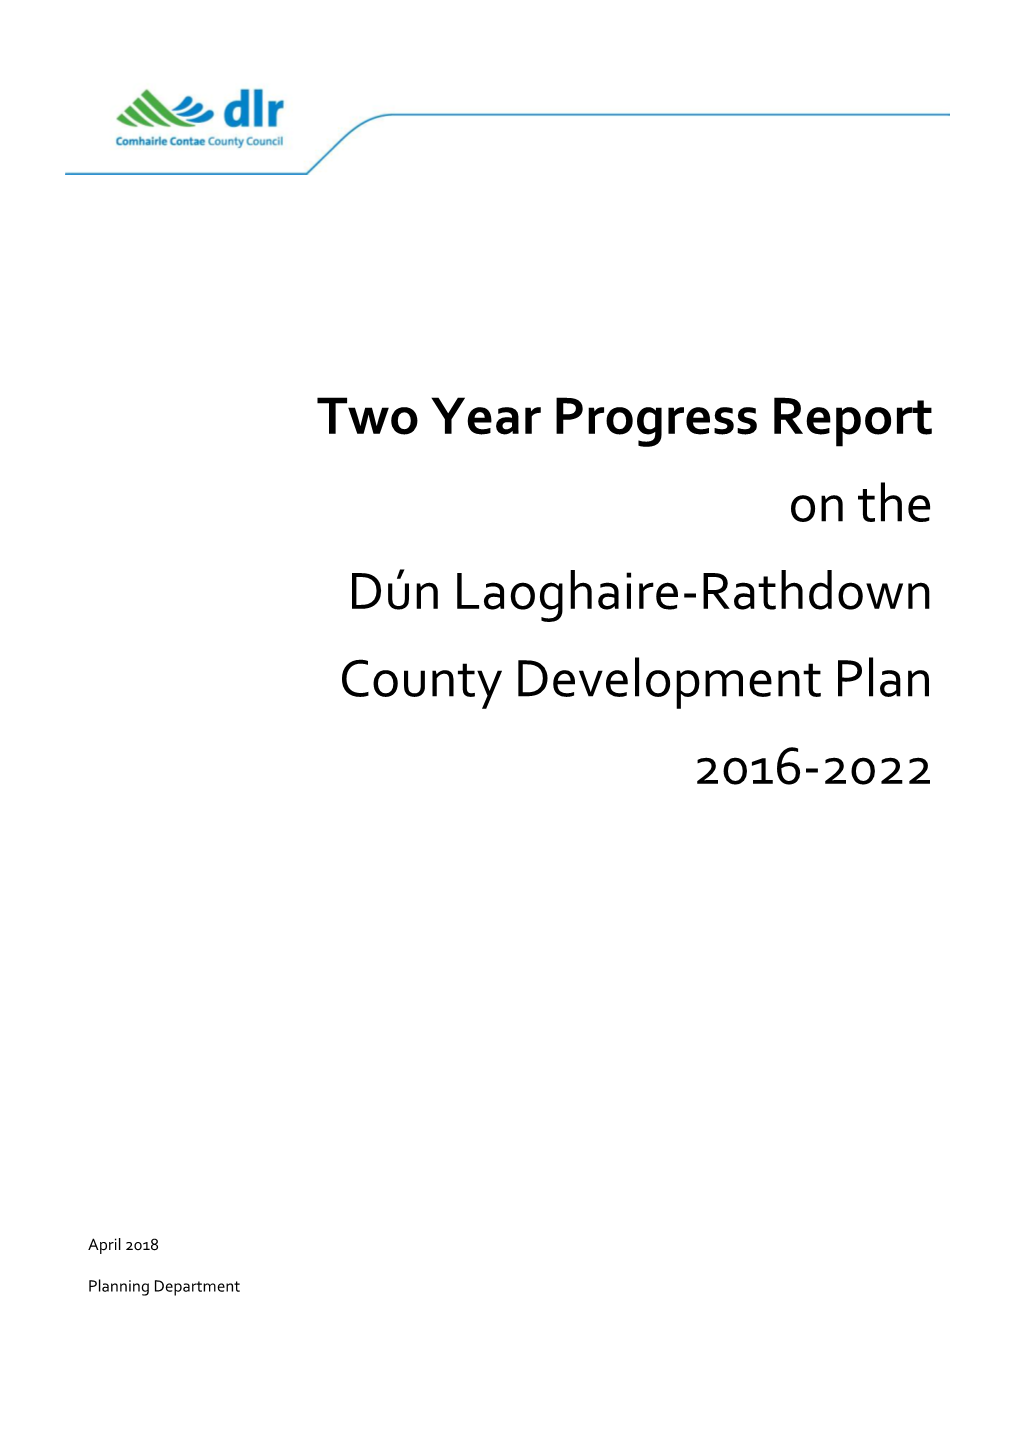 County Development Plan 2016-2022